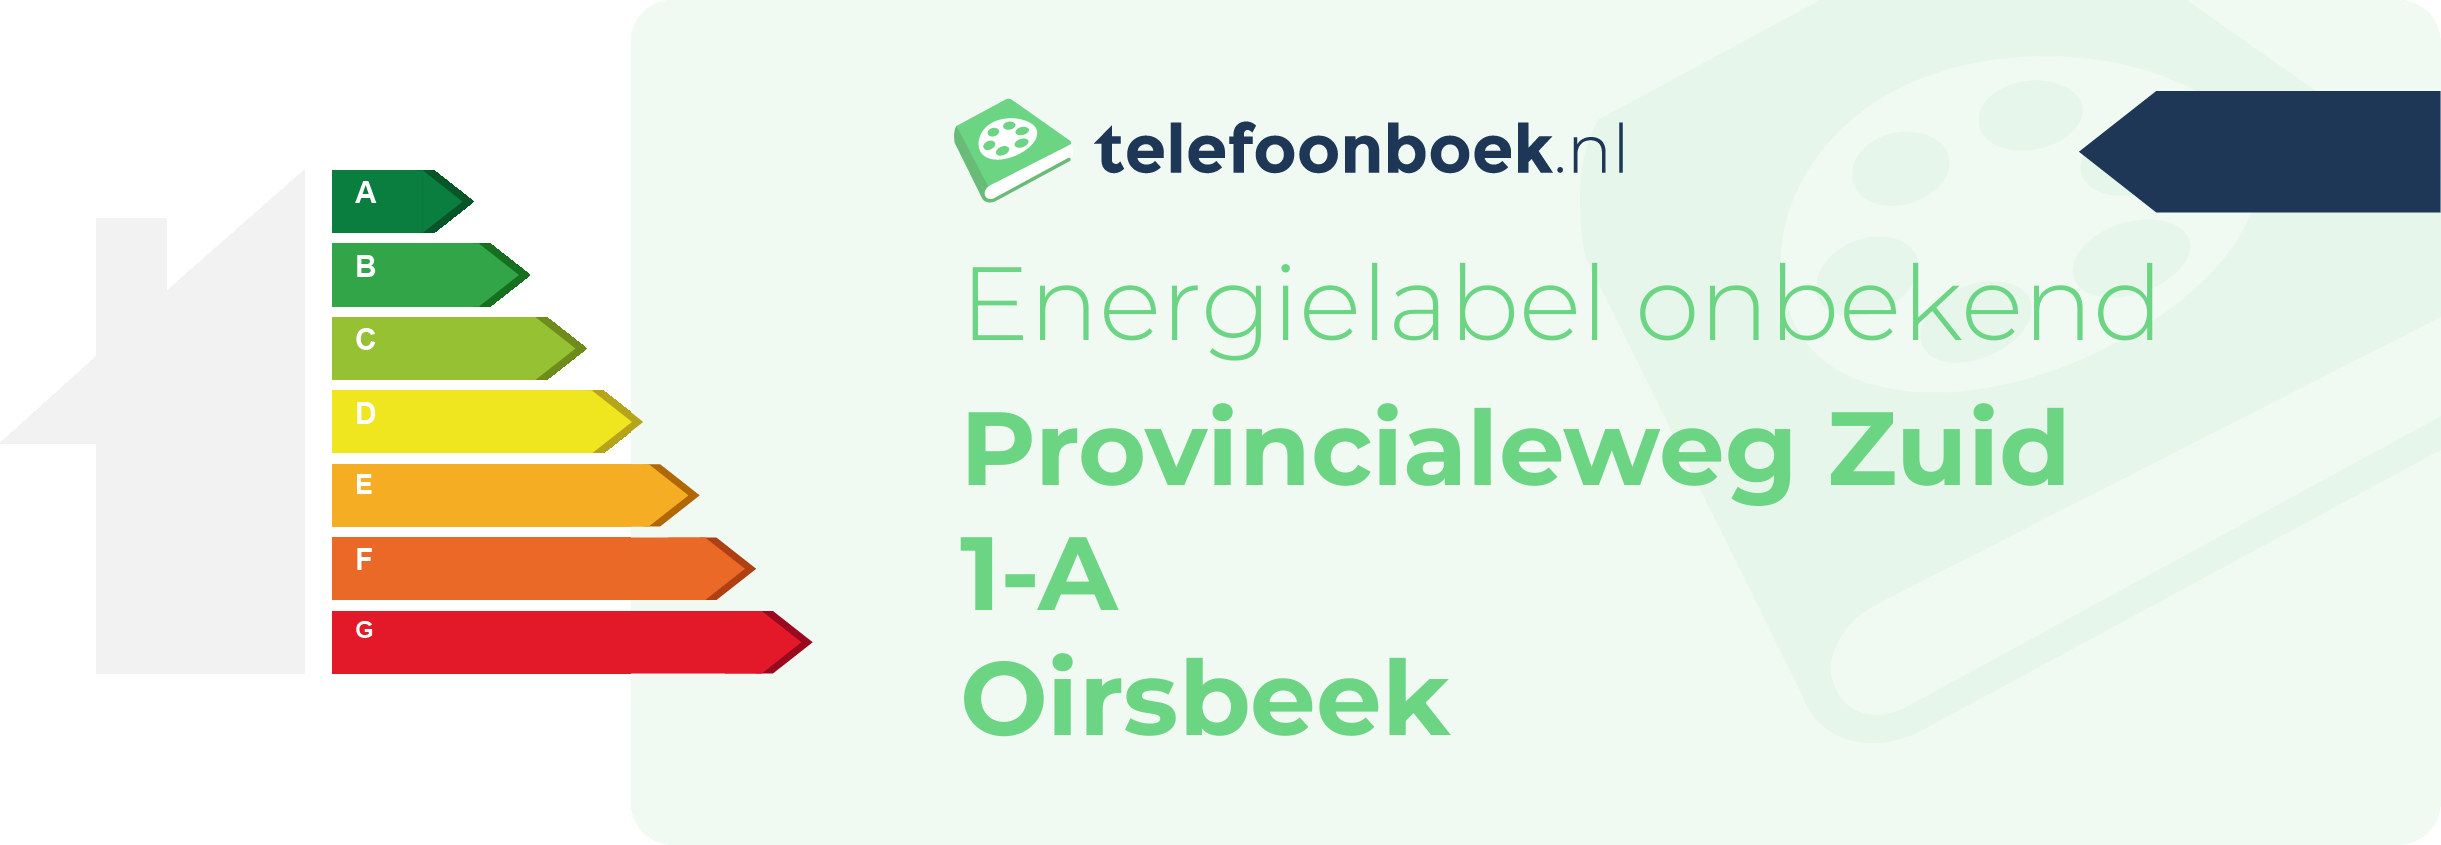 Energielabel Provincialeweg Zuid 1-A Oirsbeek